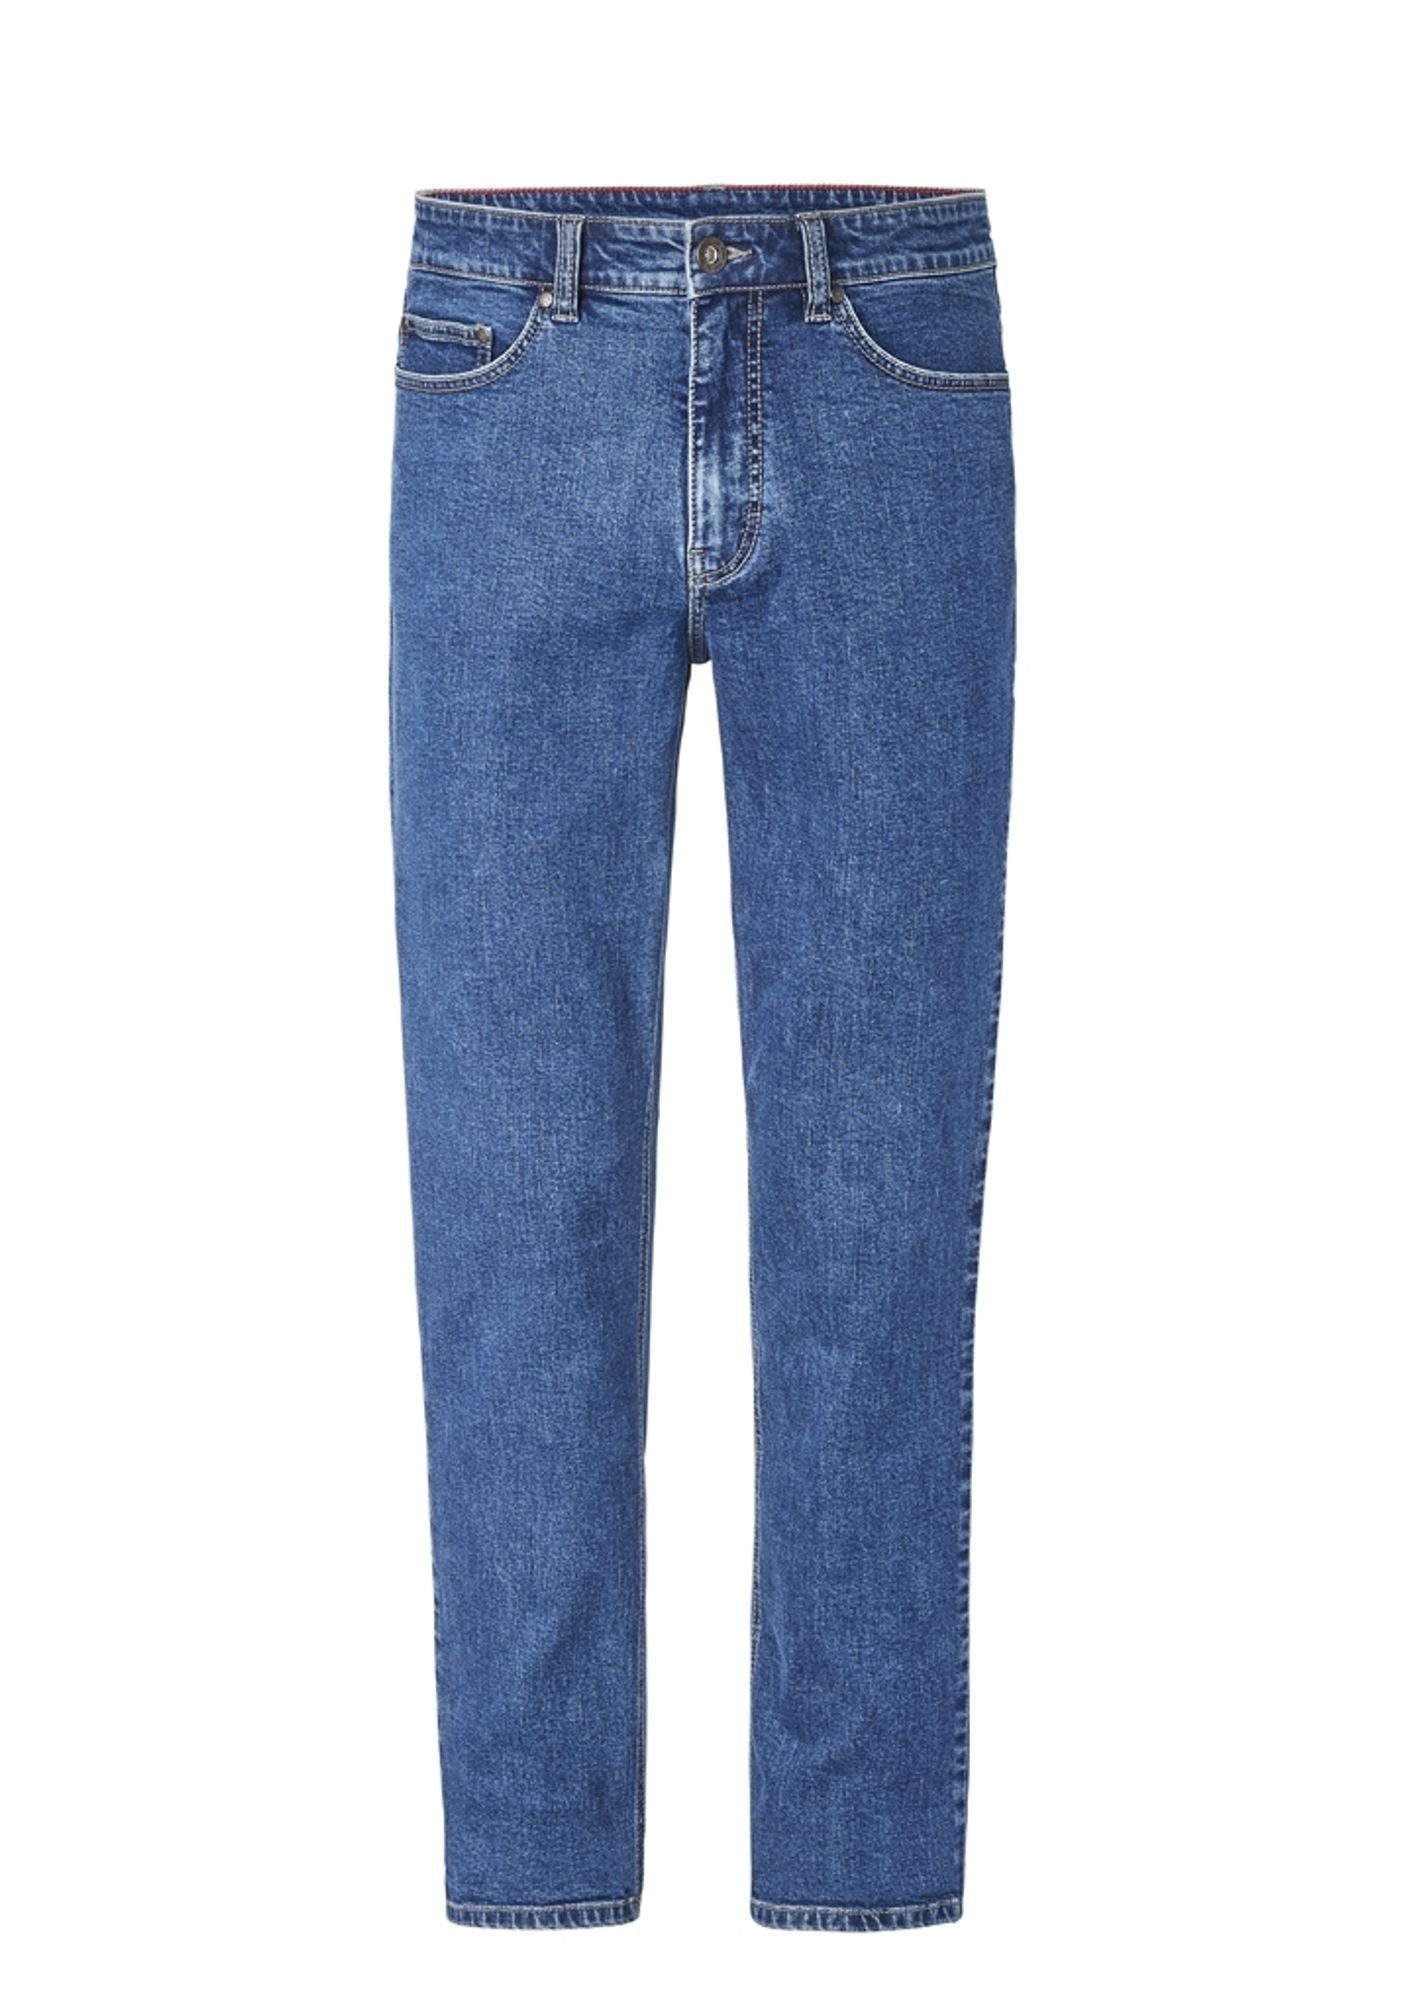 Paddock's 5-Pocket-Jeans Ranger (80253 1606 000) Medium blue stone (4639)